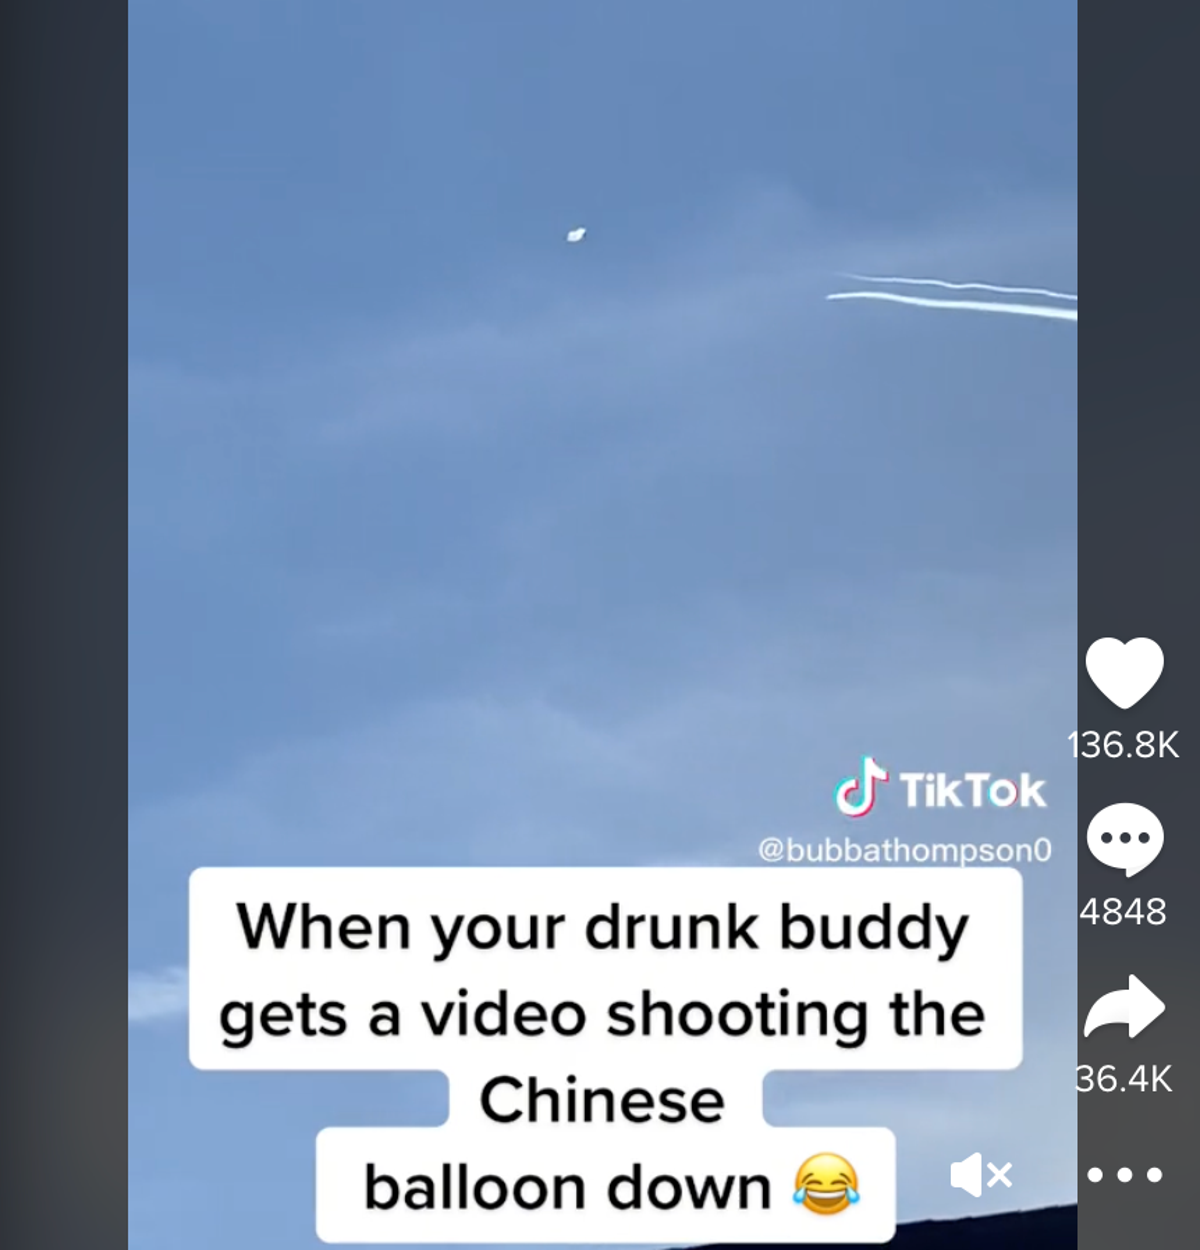 Spy balloon videos dominated TikTok. Why didn’t China stop them?